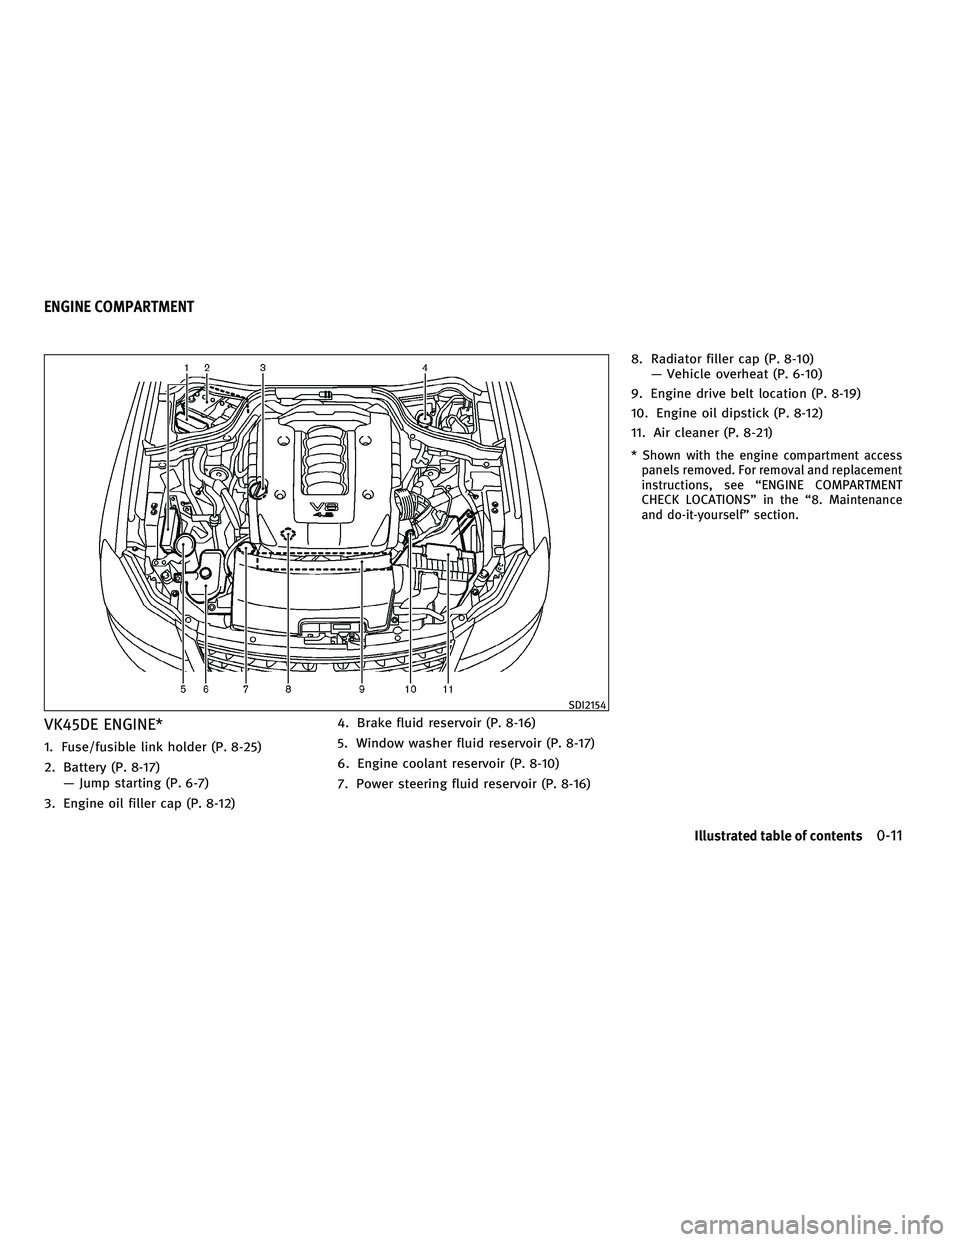 INFINITI M 2010  Owners Manual VK45DE ENGINE*
1. Fuse/fusible link holder (P. 8-25)
2. Battery (P. 8-17)Ð Jump starting (P. 6-7)
3. Engine oil filler cap (P. 8-12) 4. Brake fluid reservoir (P. 8-16)
5. Window washer fluid reservoi